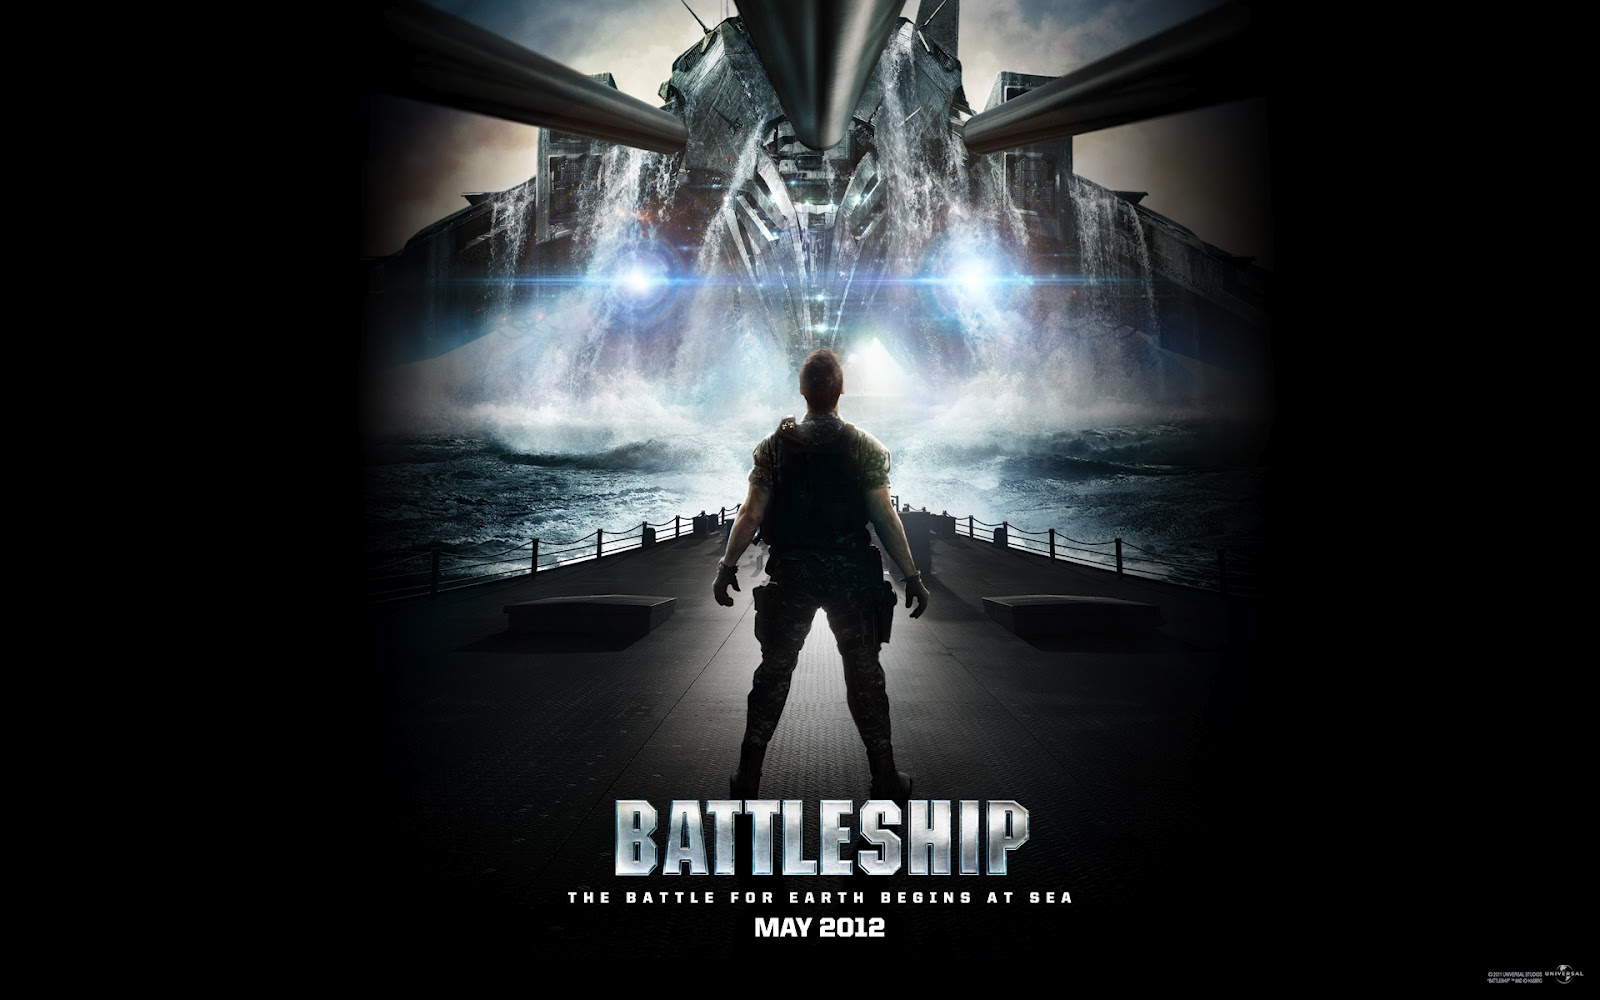 https://blogger.googleusercontent.com/img/b/R29vZ2xl/AVvXsEjql8TXfRHx6IR0rTUO7RuDXMob9J1eOUZelWzDT26NNy6vt5pk9WTrBFDBlJZEWMoW2PpN1ebPhDjOP3G9Nro4HtyQPqWgEg8aKt8GAY0apztYXe7pwMIDwfIynZjO7l1S3QM-RM-LeKQ/s1600/battleship+2012.jpg